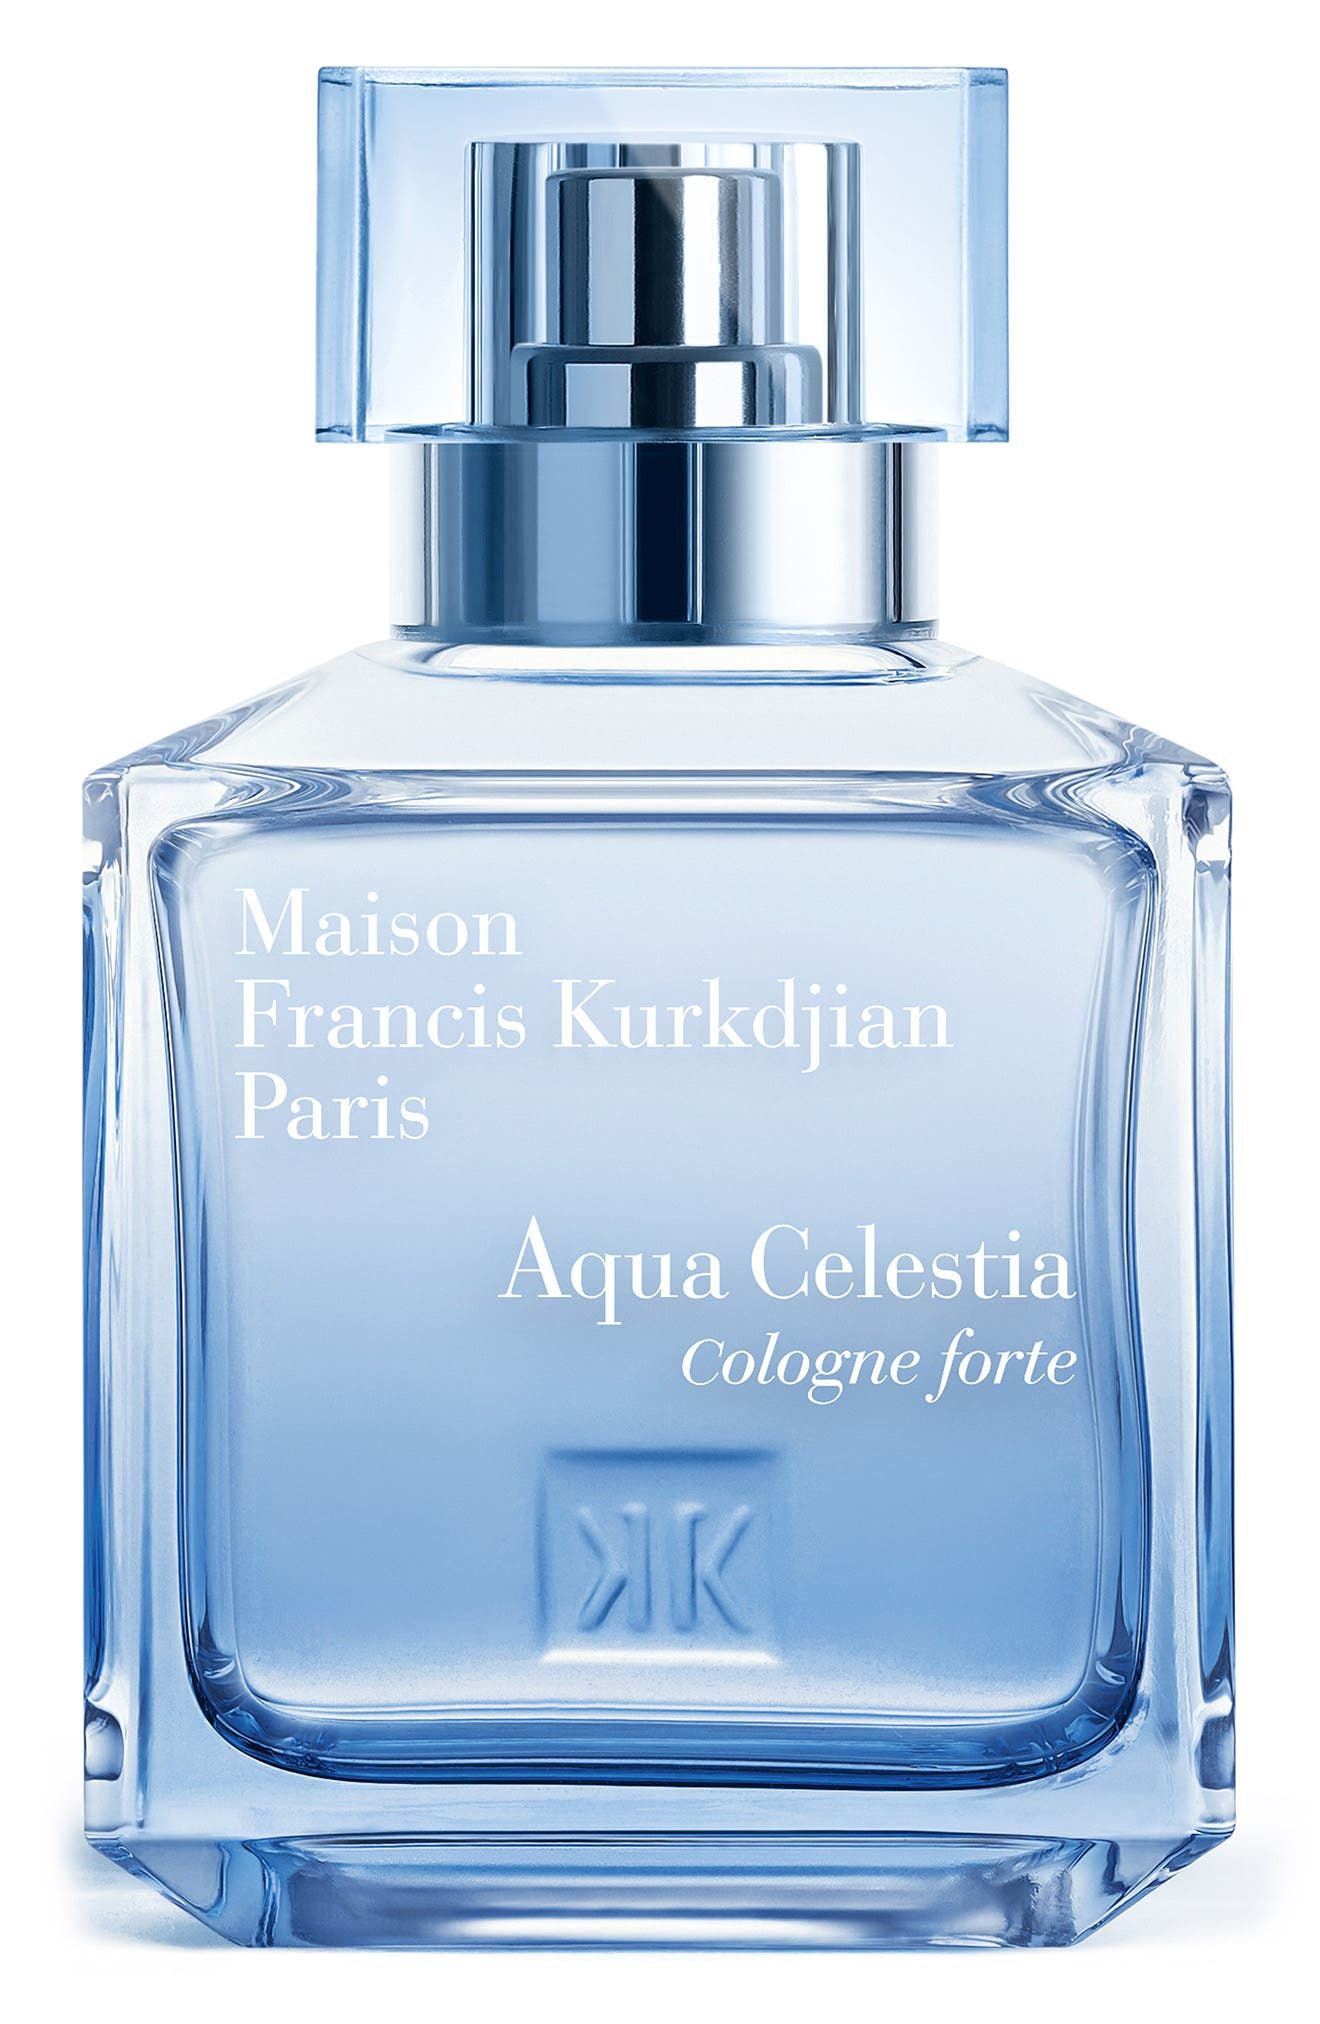 Maison Francis Kurkdjian Paris Aqua Celestia Cologne forte Eau de Parfum